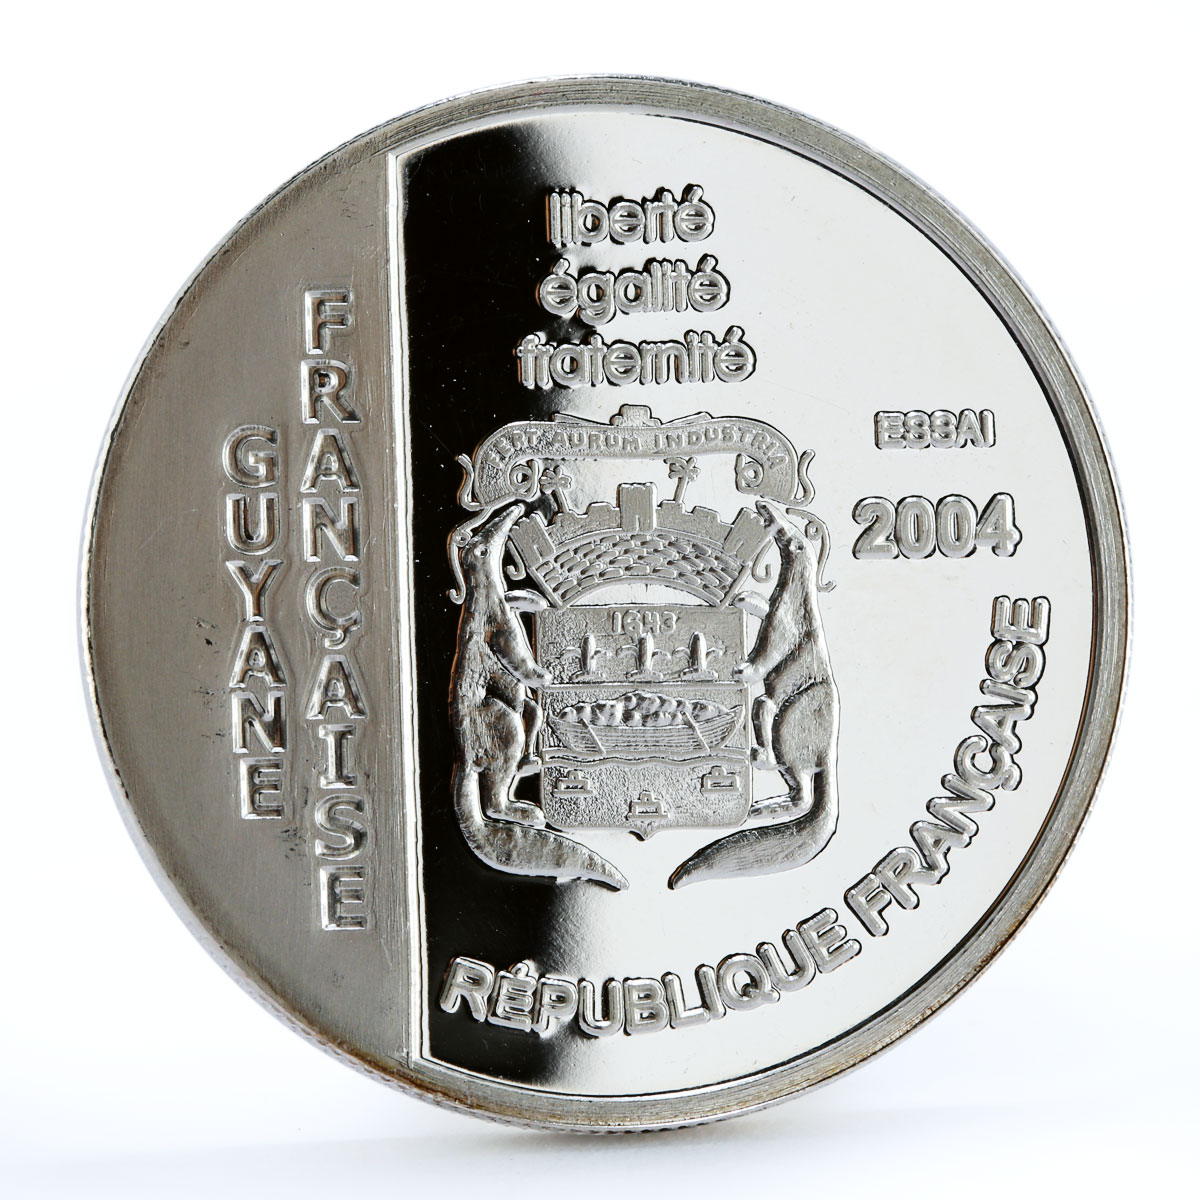 France 1 1/2 euro Le Soleil Royal Ship Clipper proof silver coin 2004